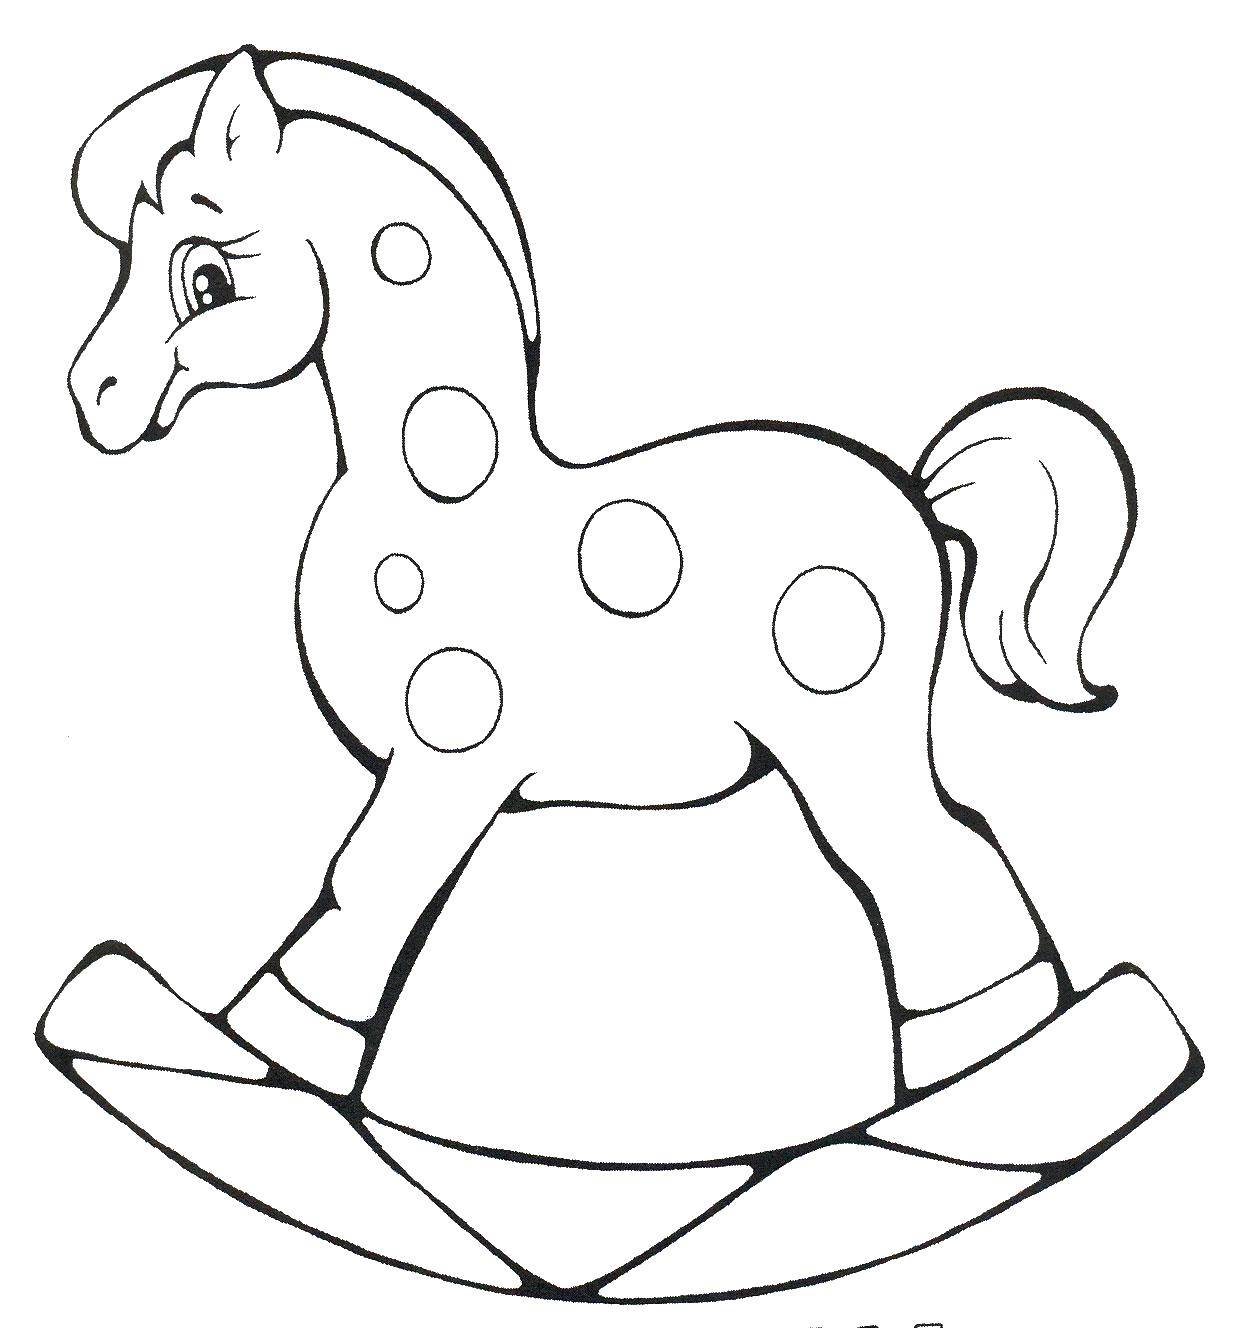 Название: Раскраска Лошадка качалка. Категория: игрушки. Теги: Лошадь.